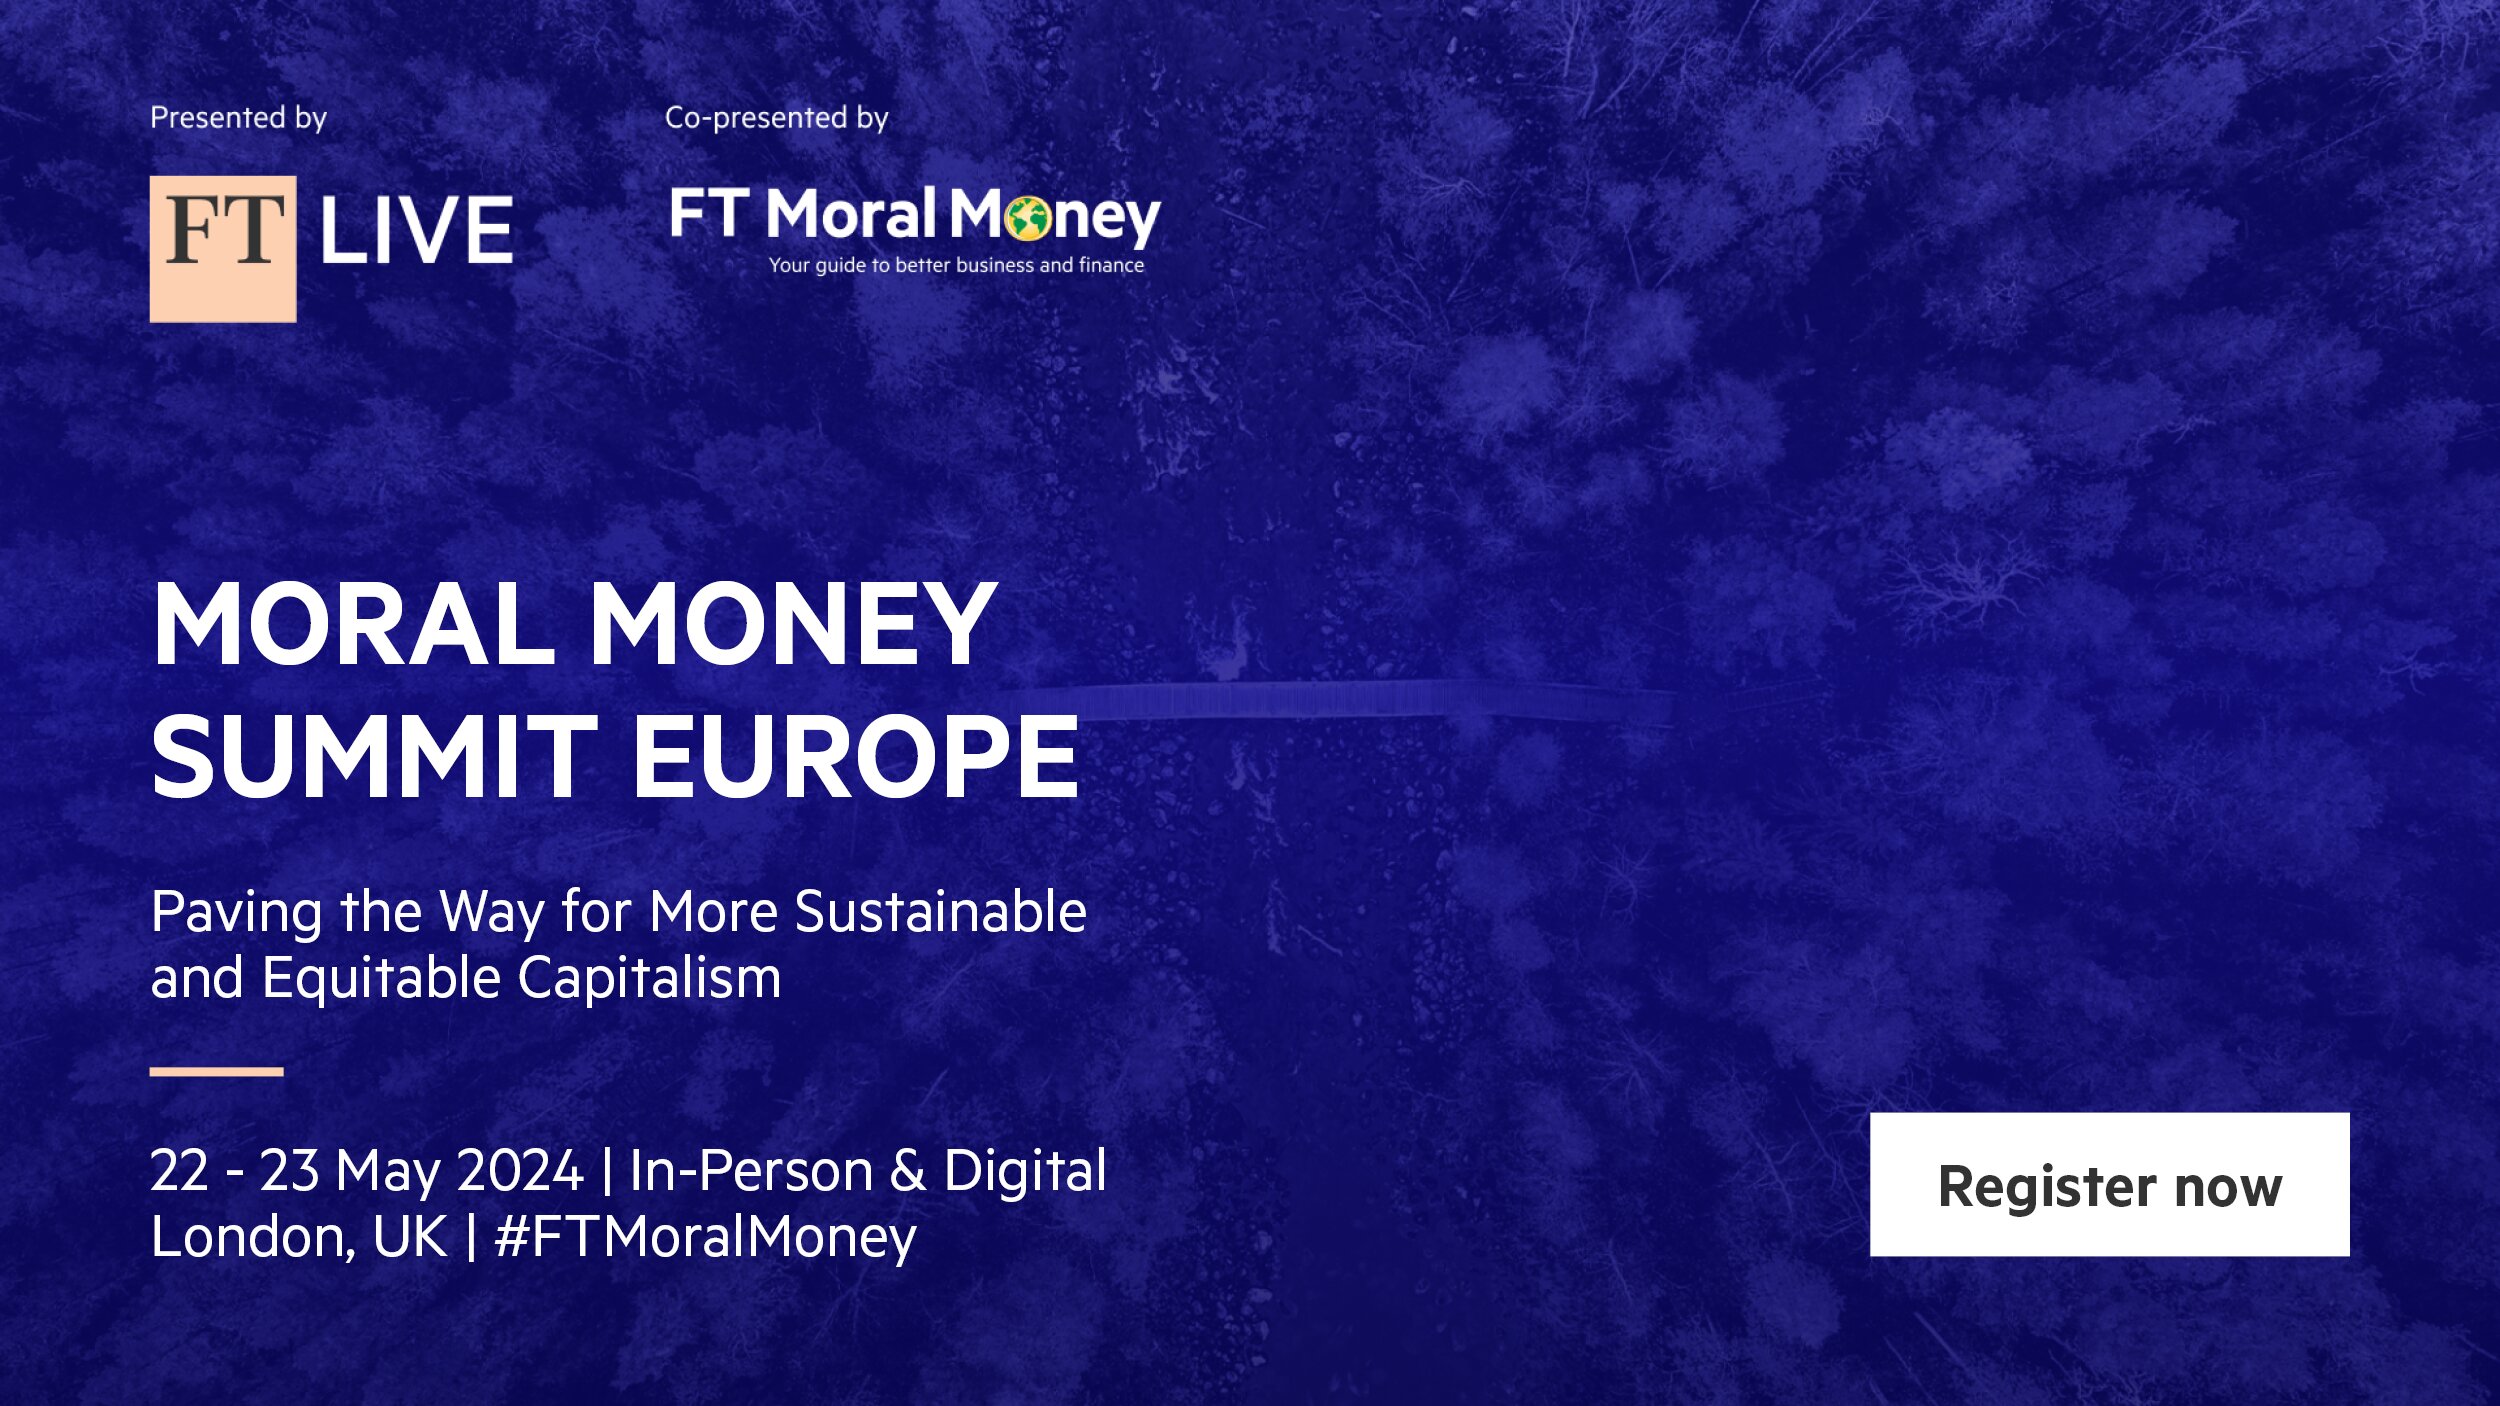 FT Moral Money Summit Europe